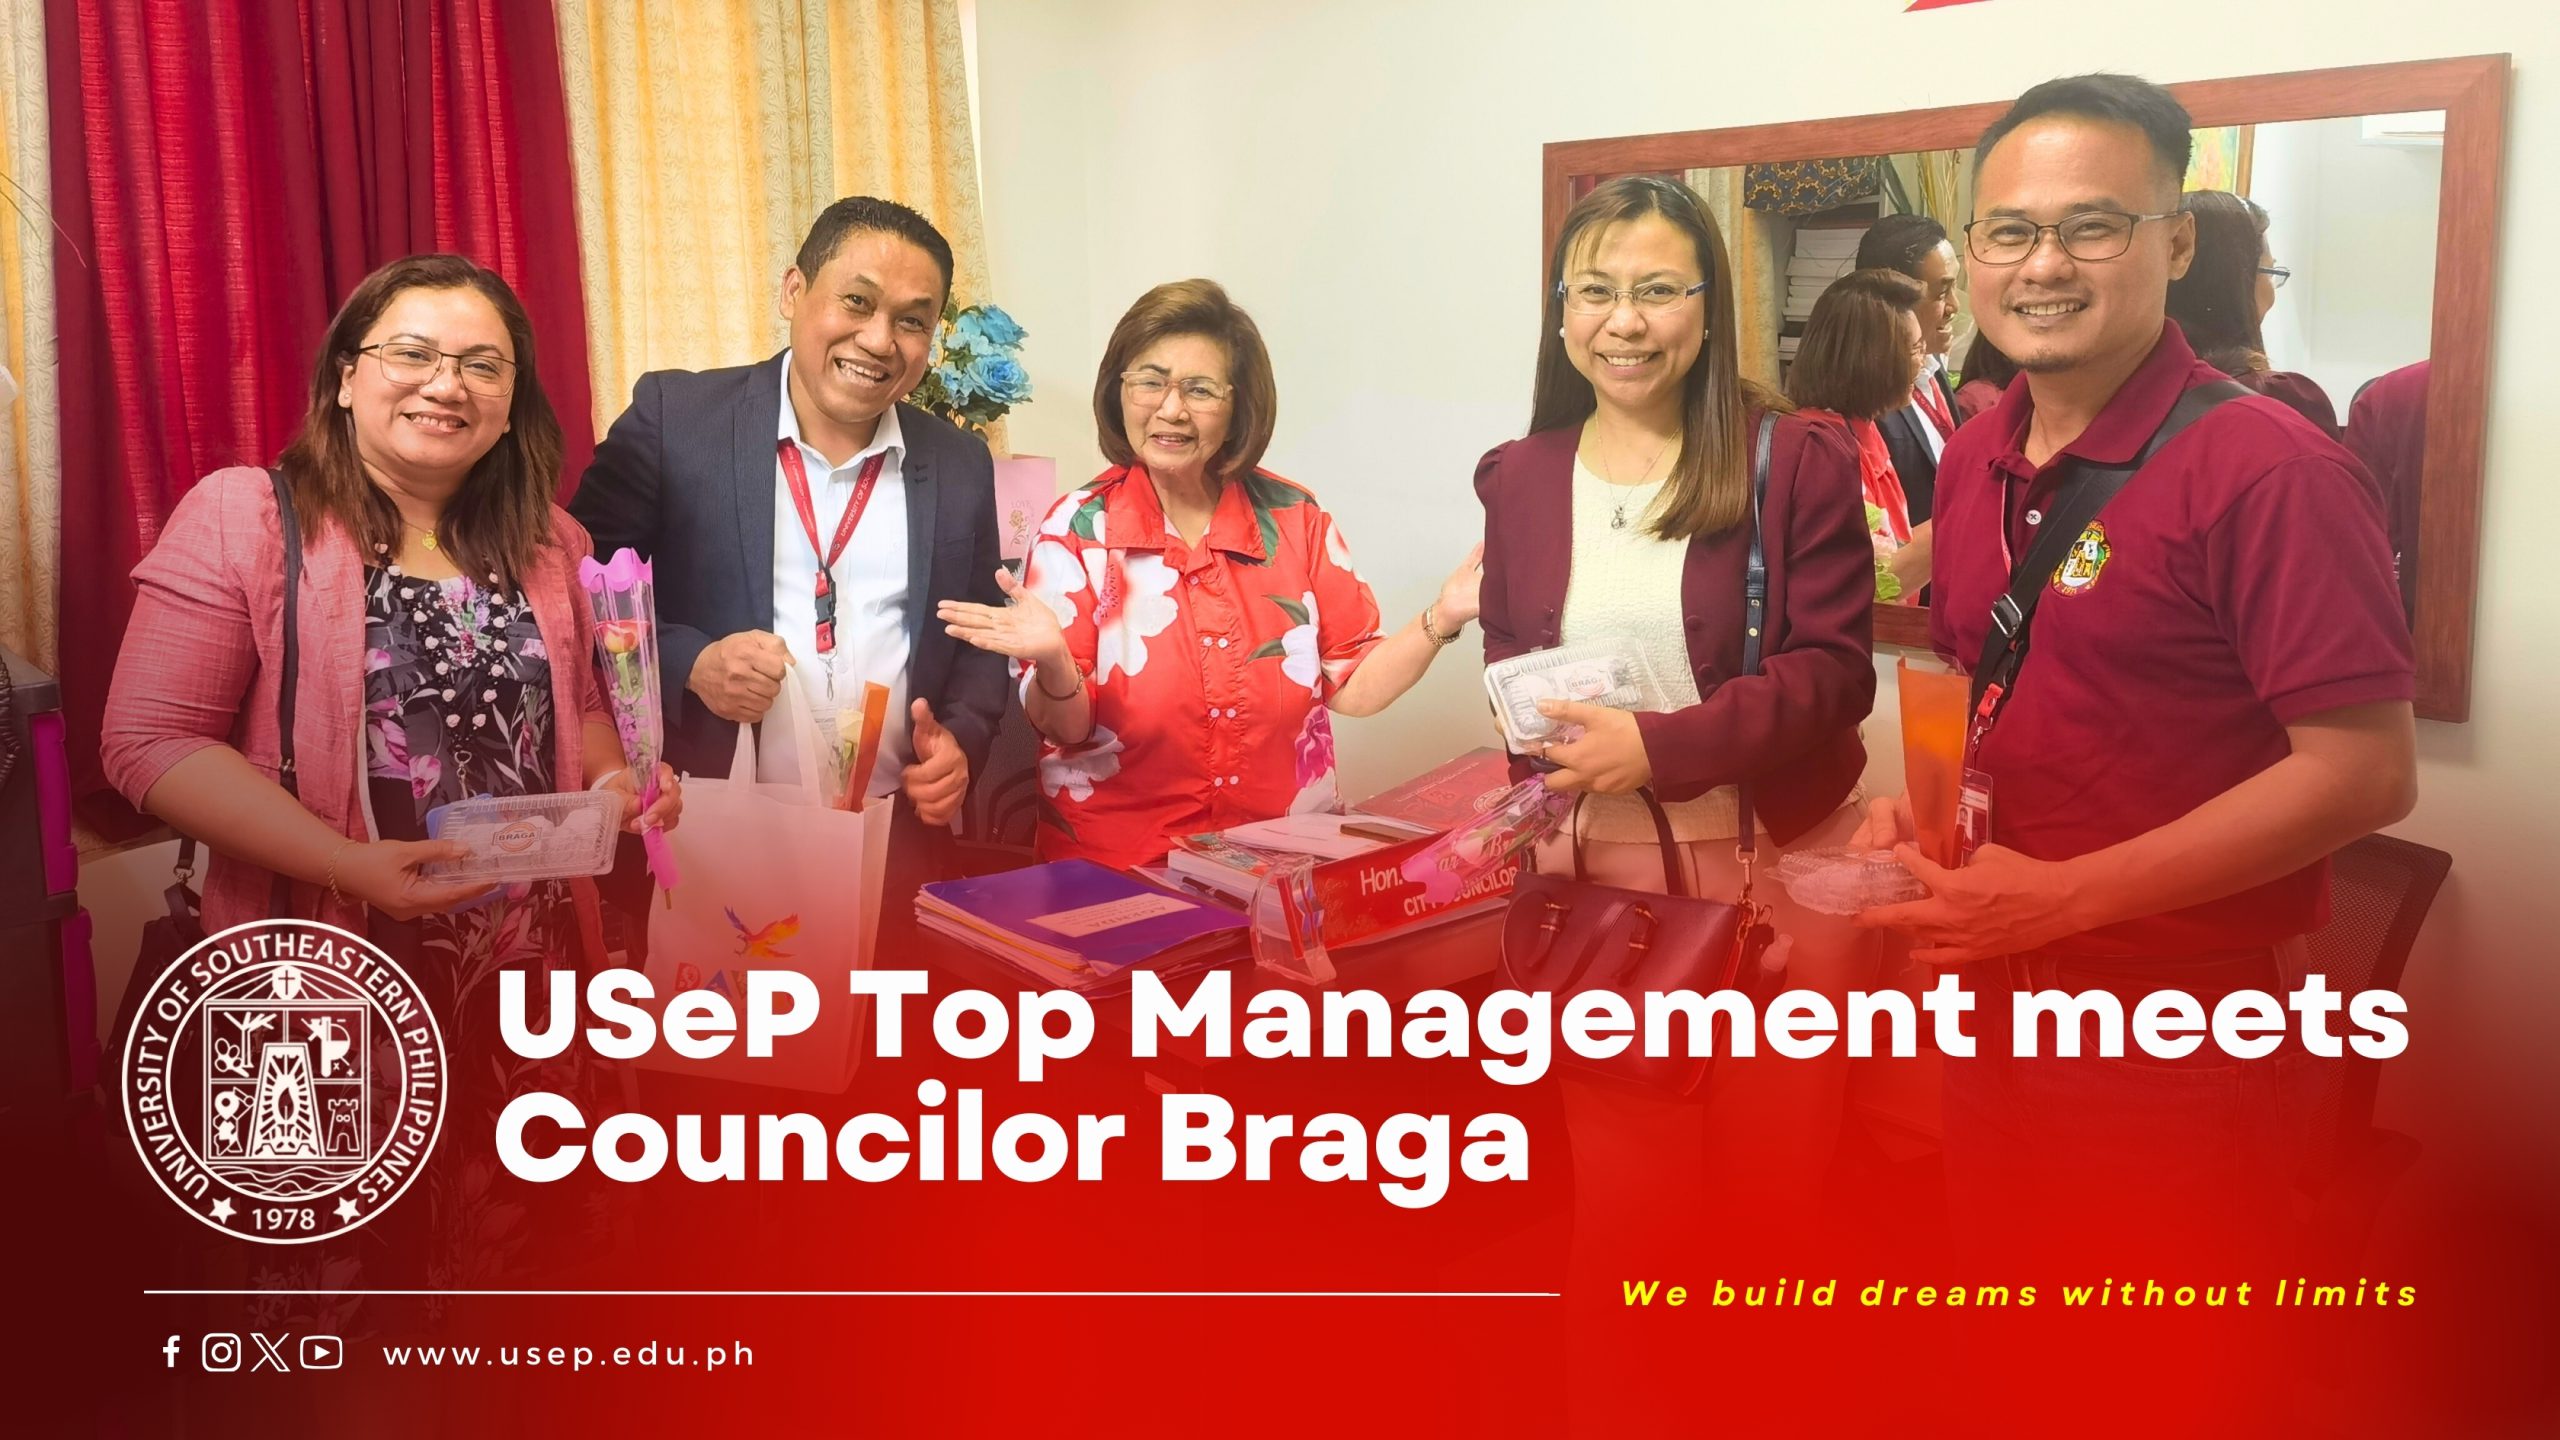 USeP Top Management meets Councilor Braga